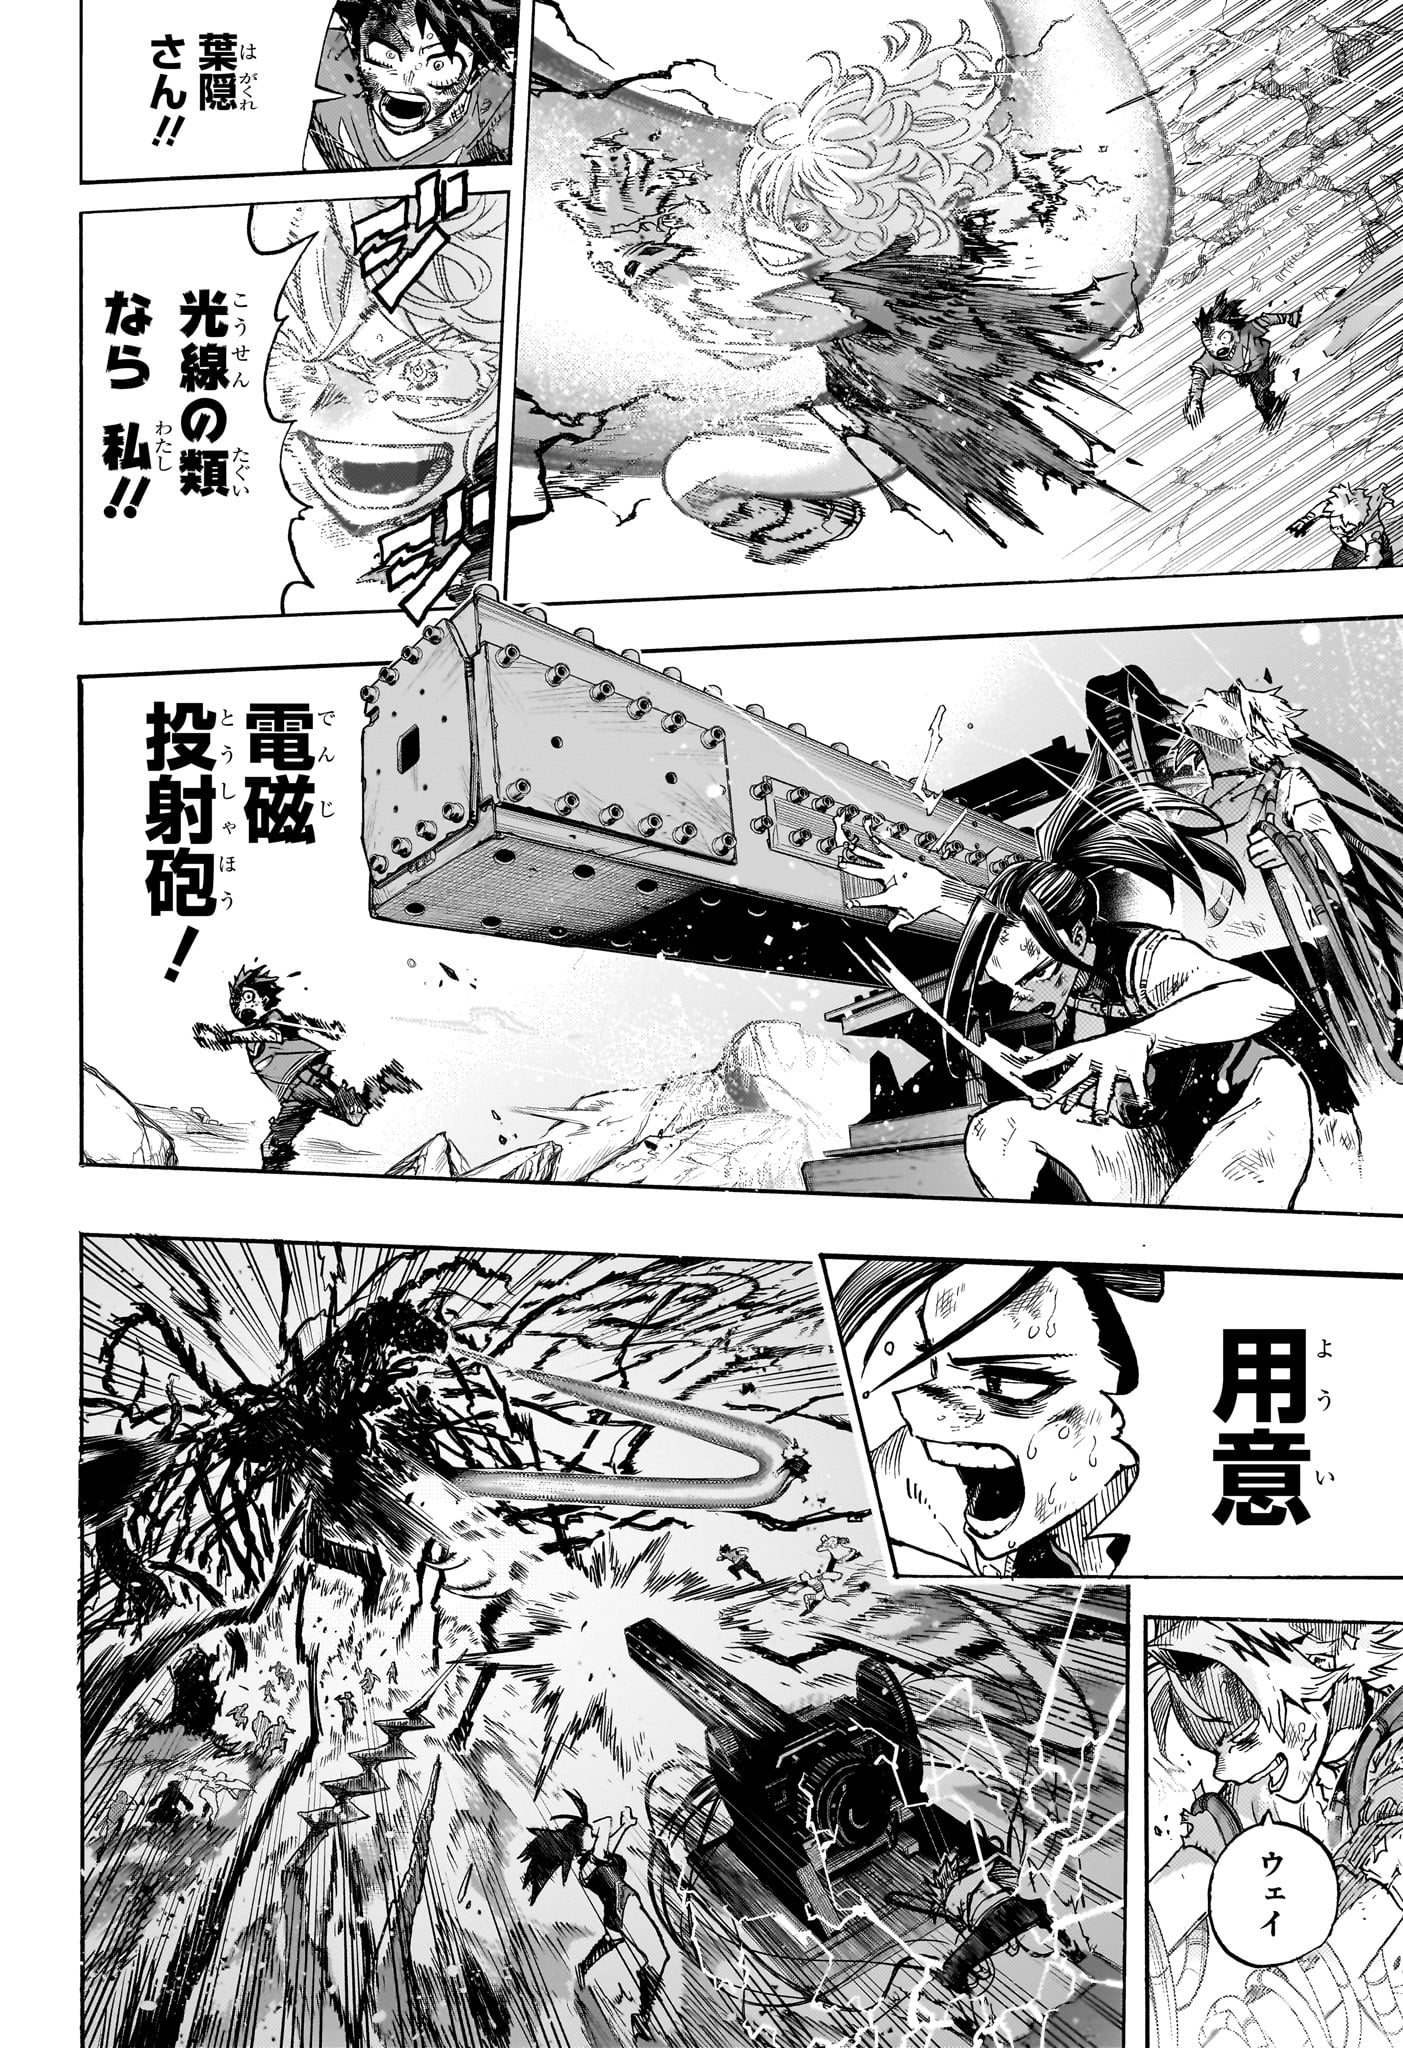 Boku no Hero Academia - Chapter 422 - Page 4